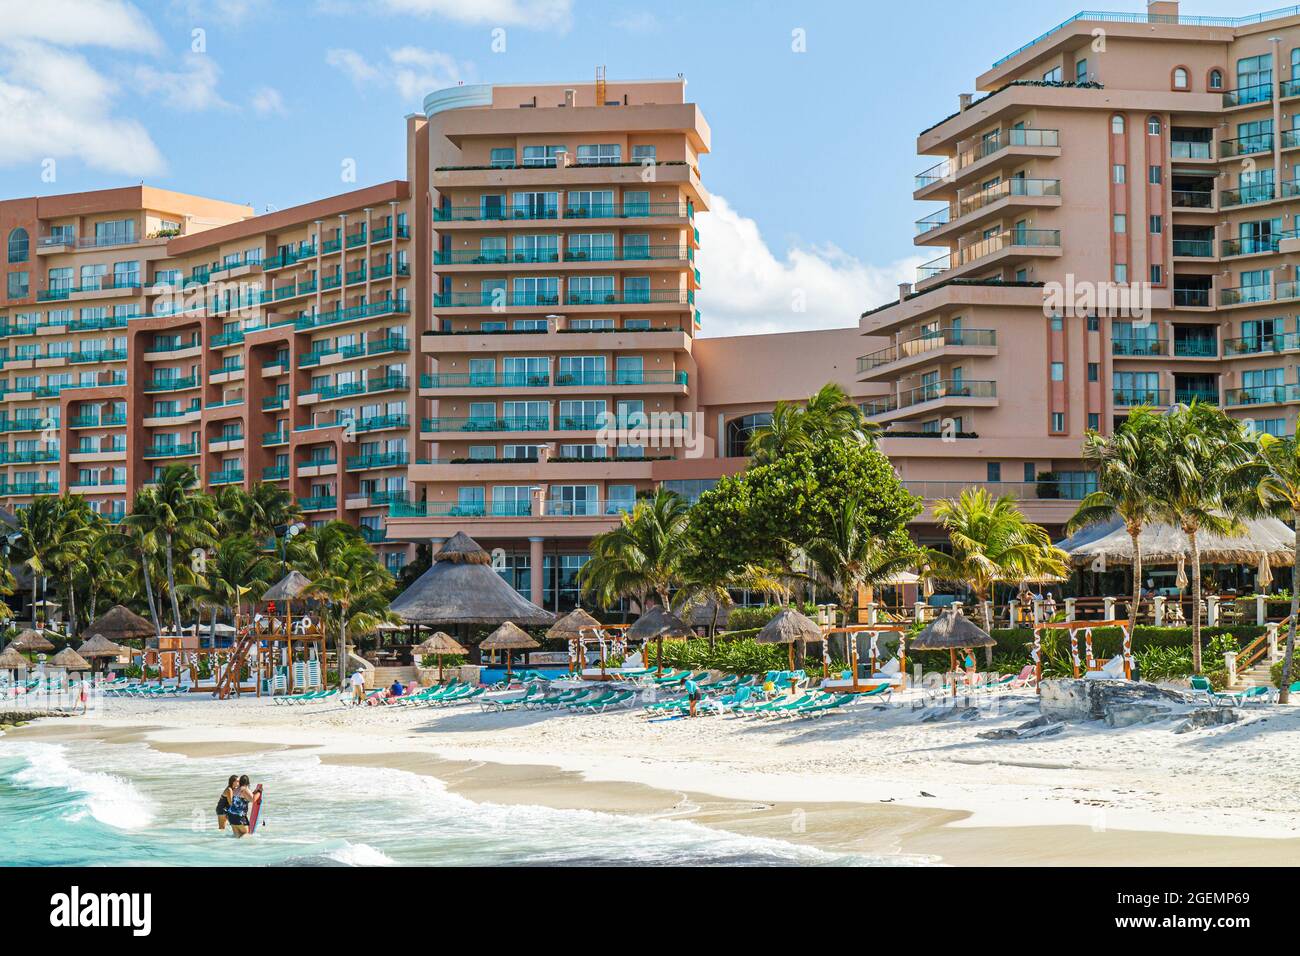 Mexique Yucatán Peninsula Cancun Beach Hotel zone Playa Caracol, mer des Caraïbes station balnéaire en bord de mer, Chikee chickee huts Waves les chaises longues d'eau Banque D'Images